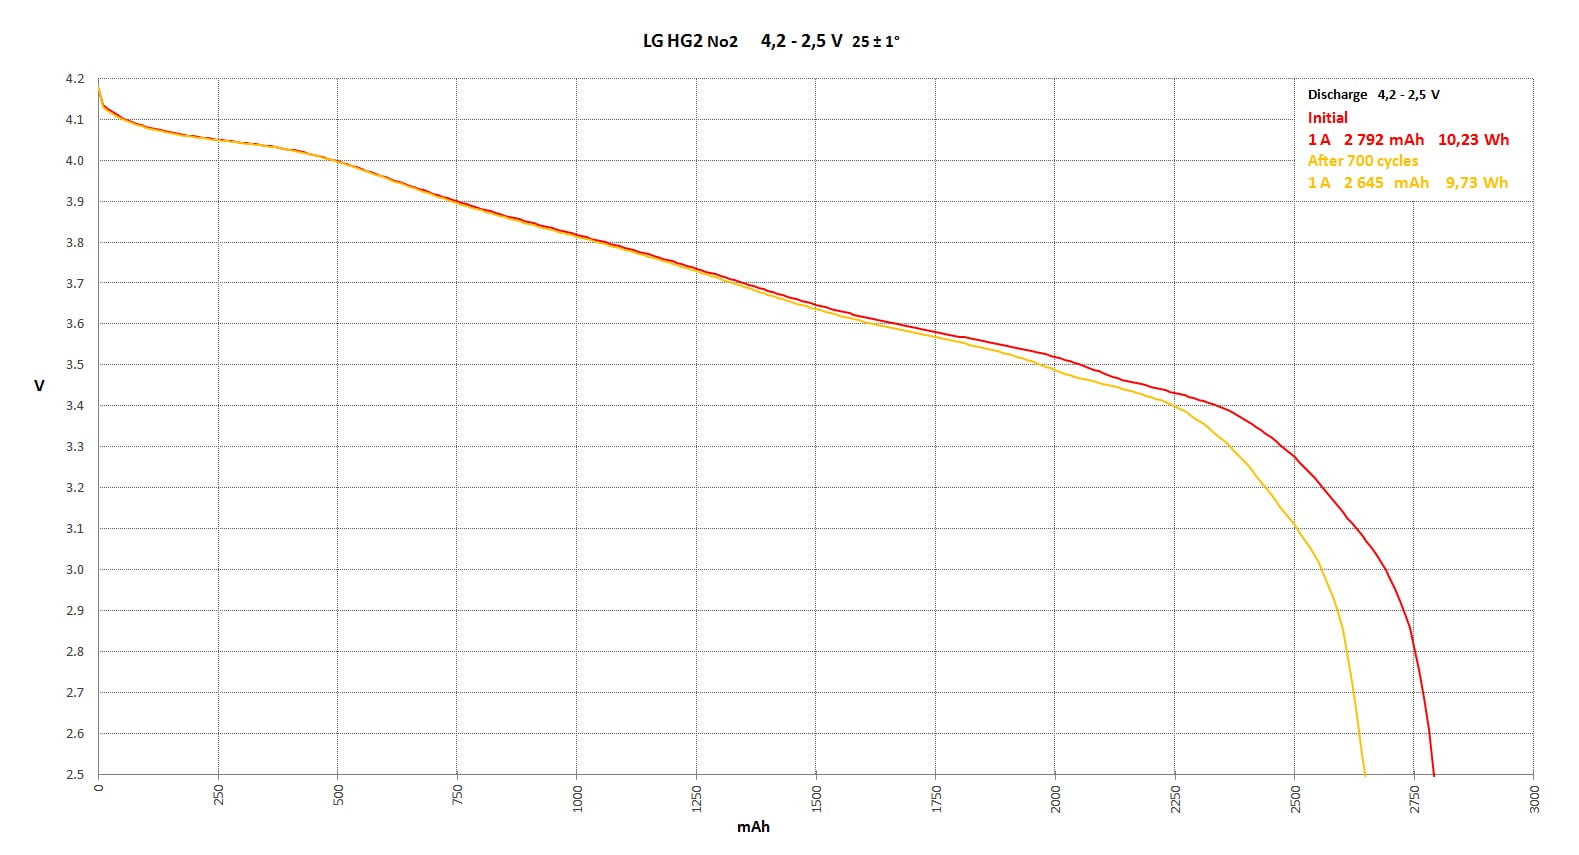 LG HG2 No2 after 700 cycles 4,2 - 2,5 V  1 A disch comparison.jpg